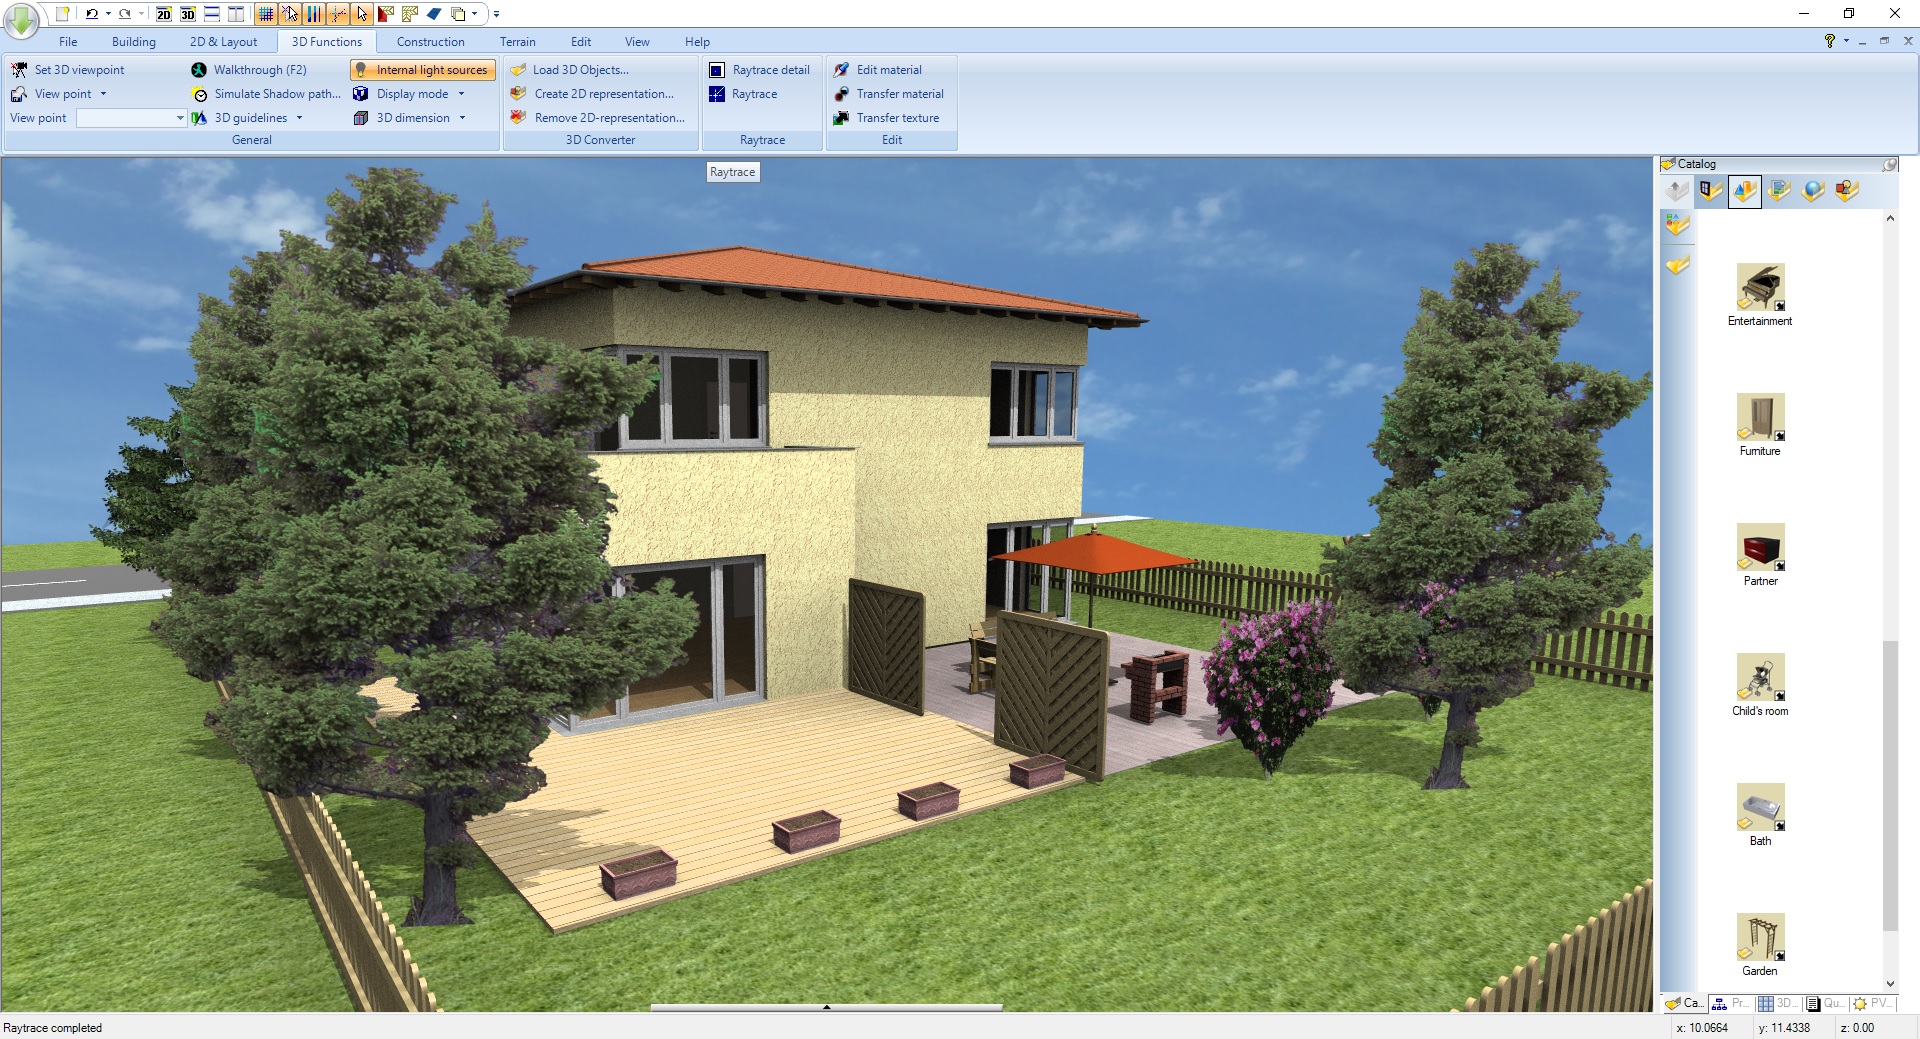 virtual architect professional home design 8.0 tutorials